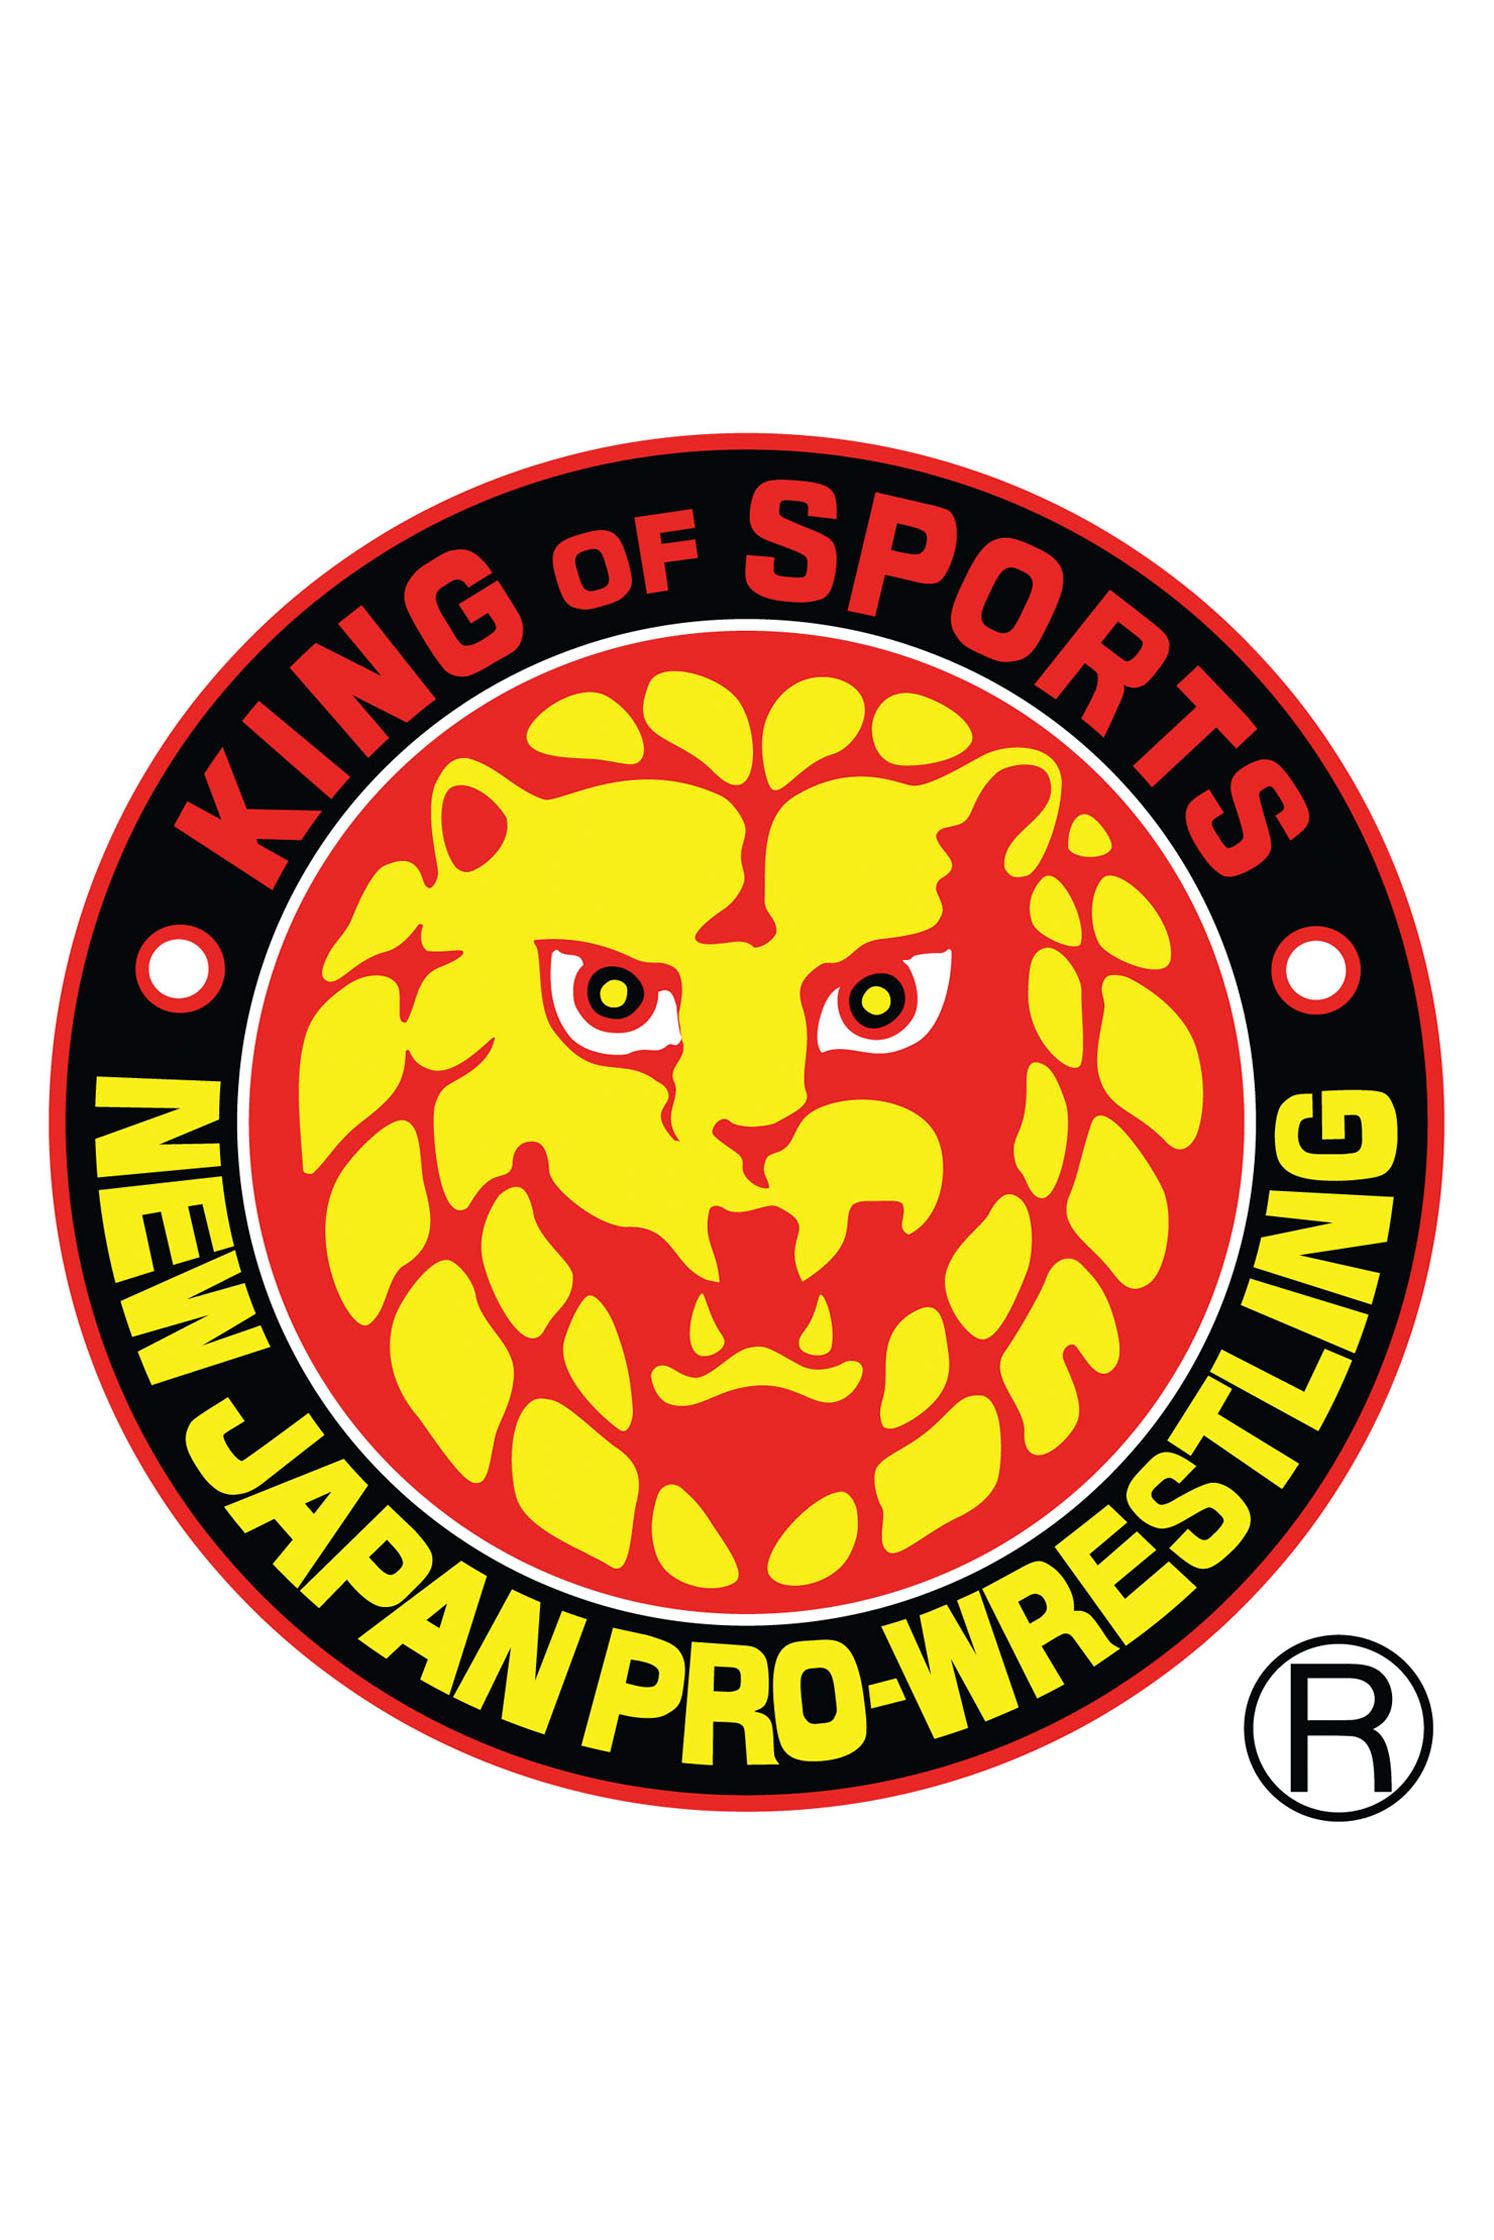 NJPW logo